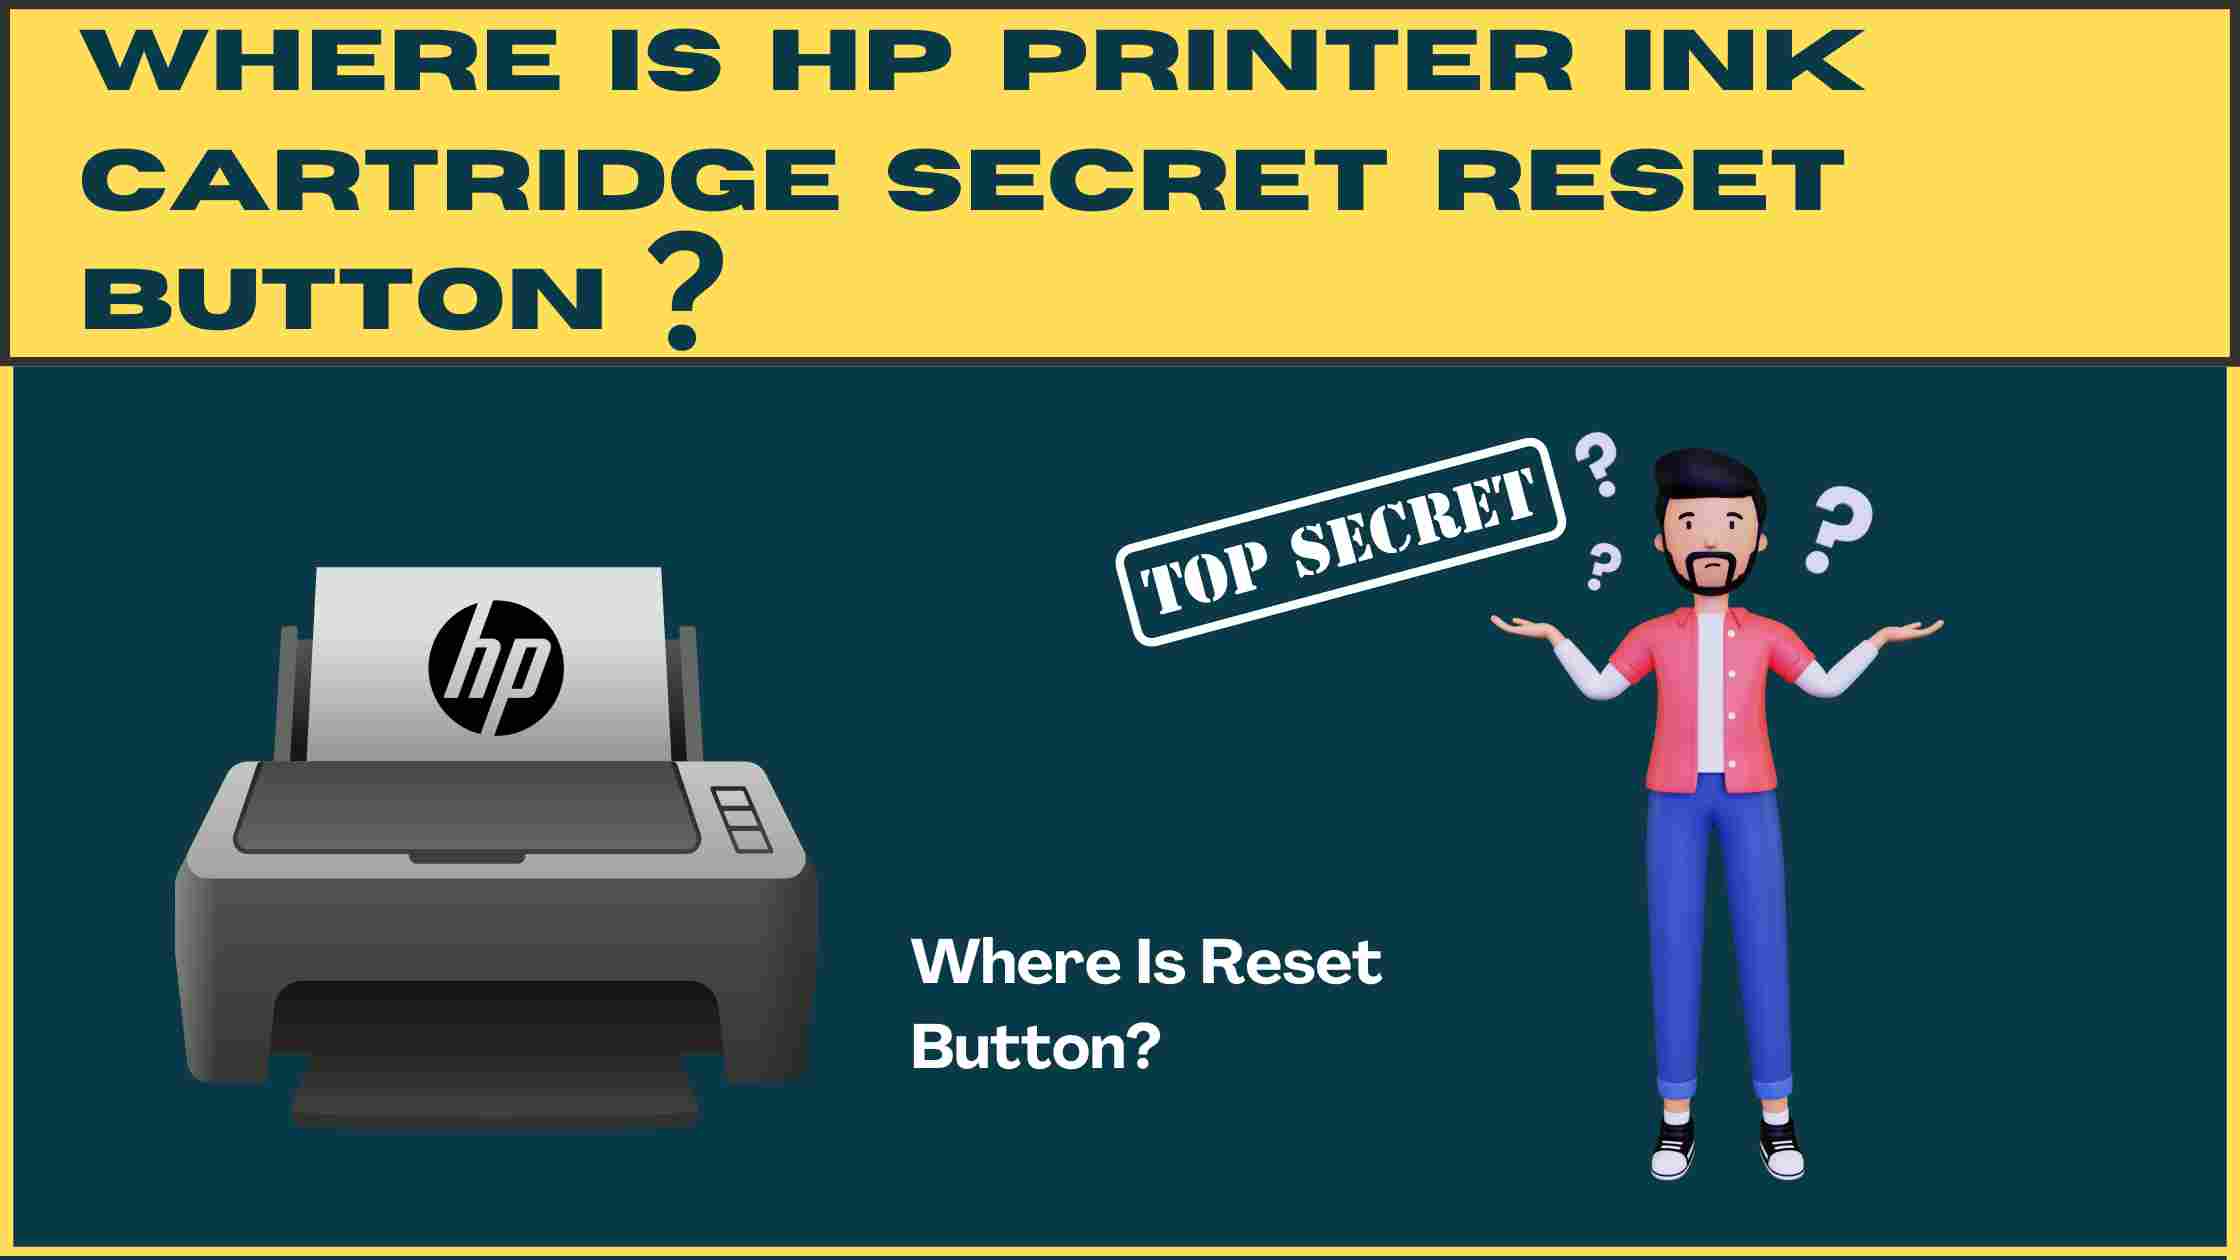 hp printer ink cartridge secret reset button